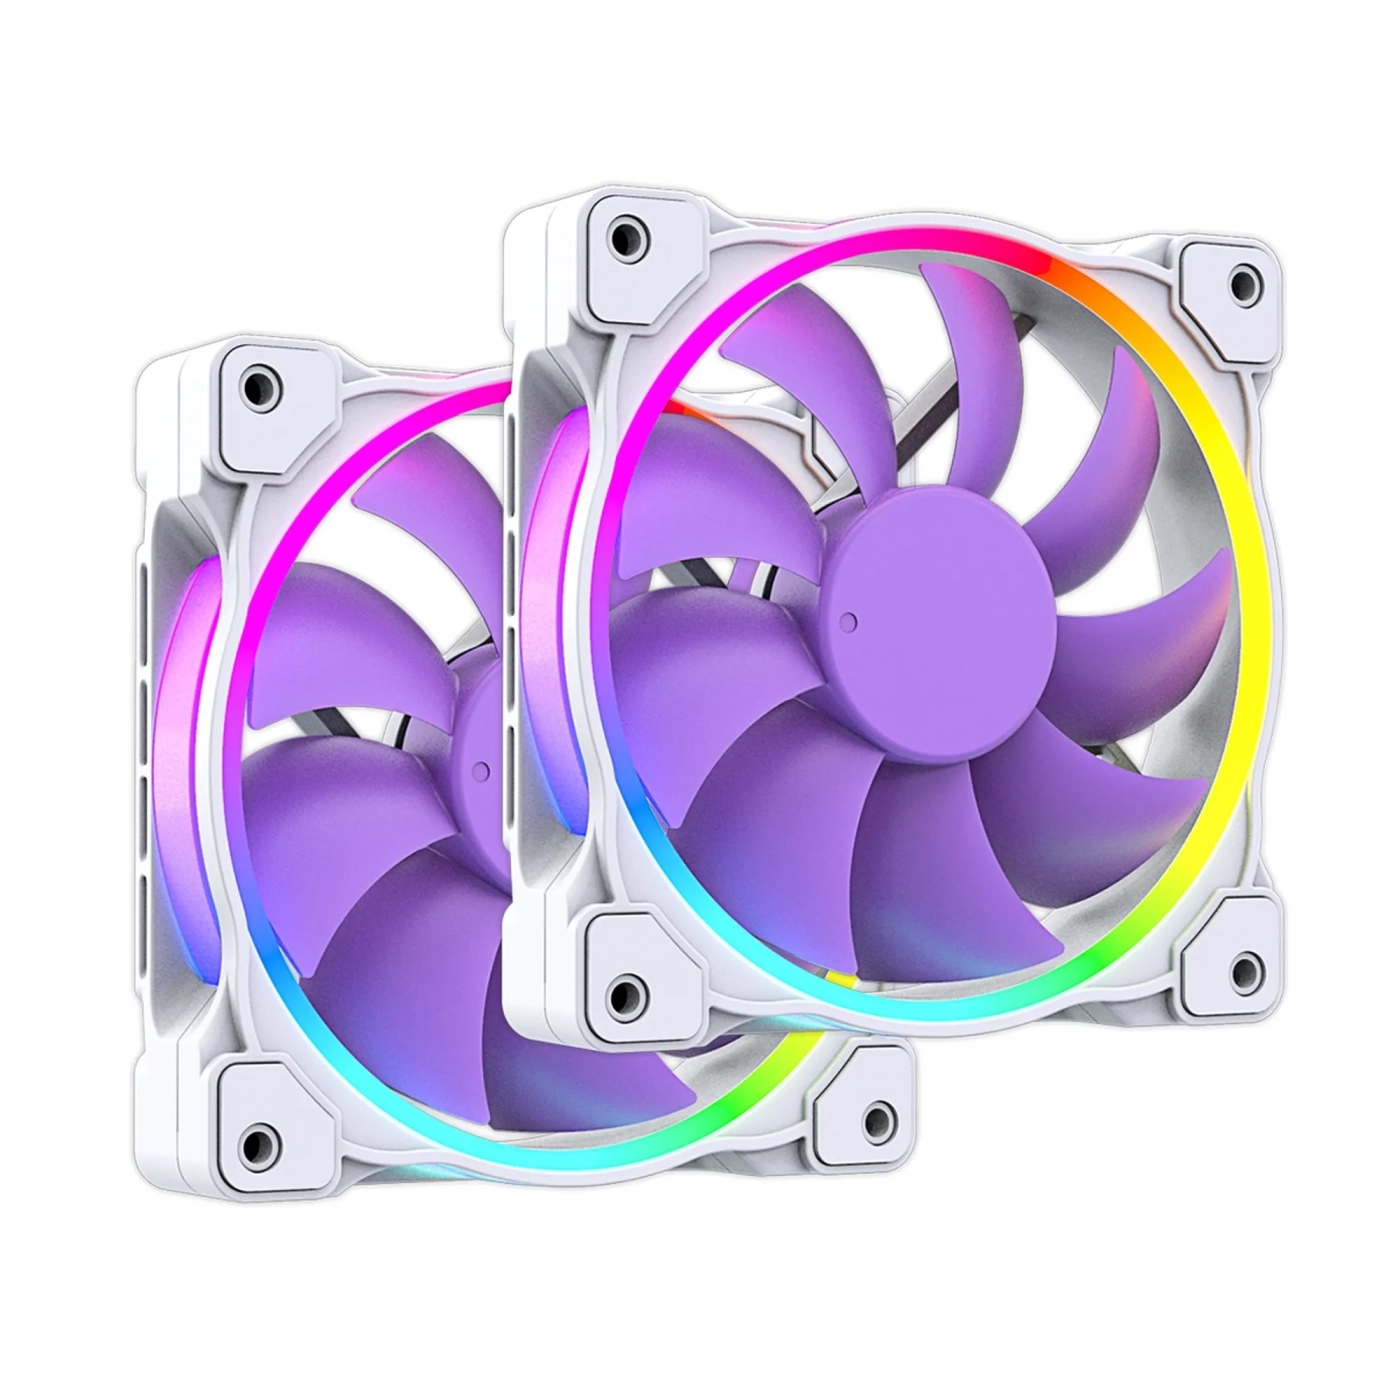 Купить Система водяного охлаждения ID-Cooling Pinkflow 240 Diamond Purple - фото 5